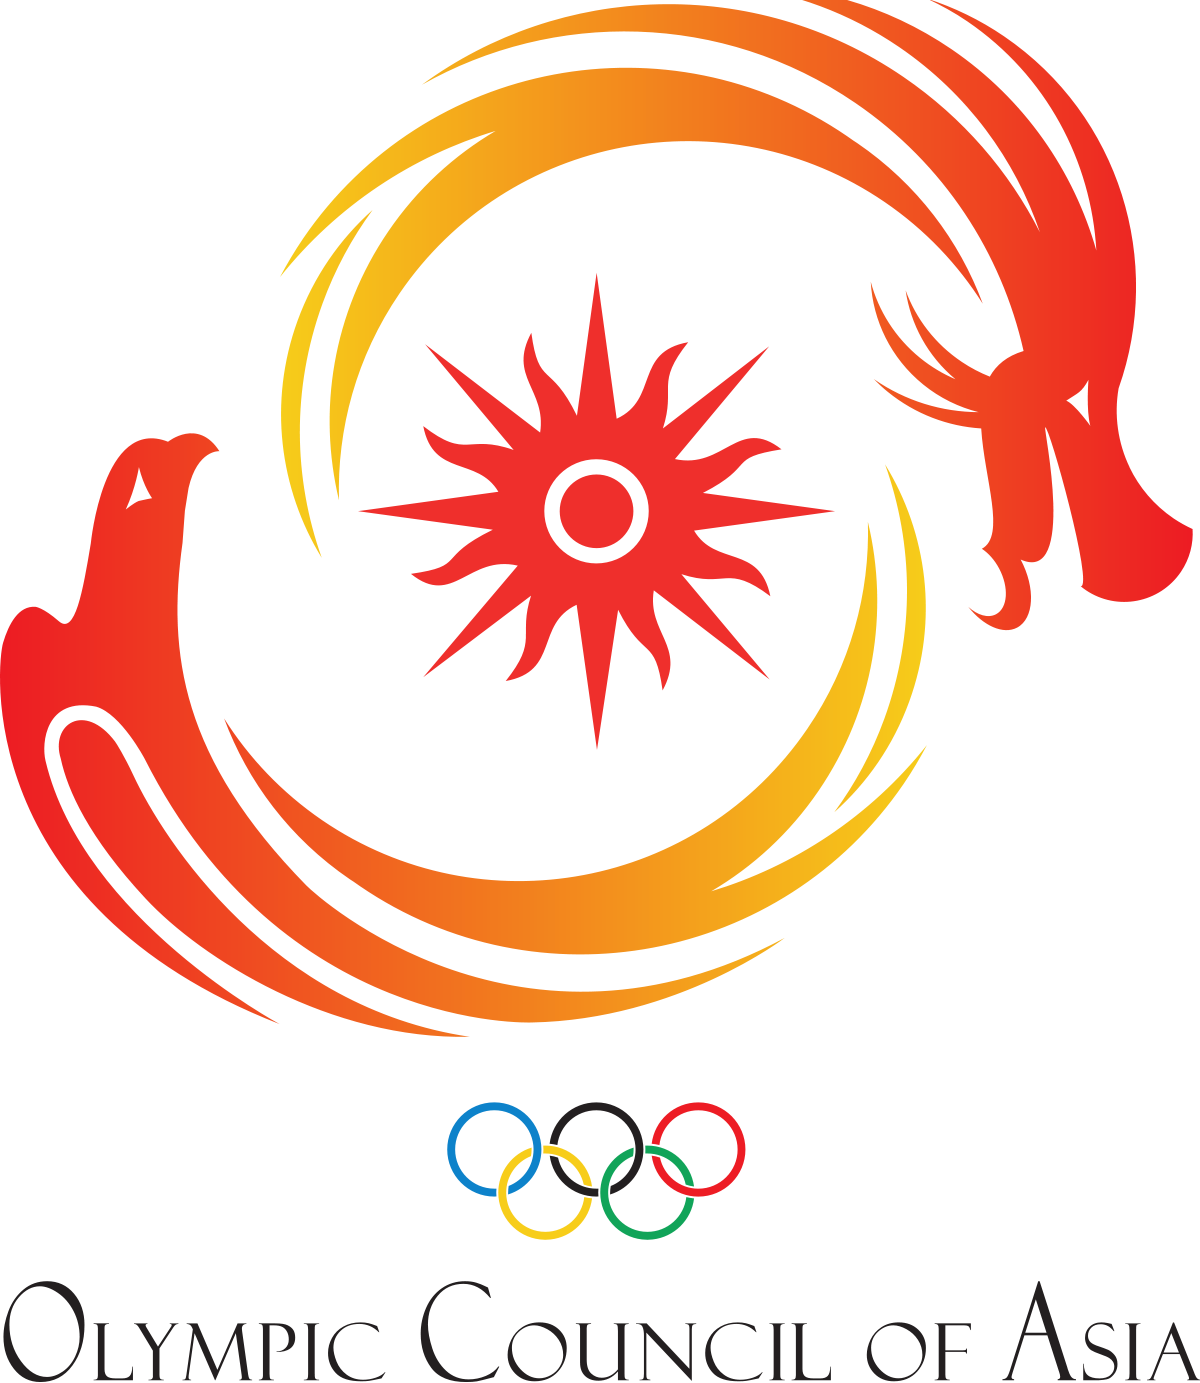 Indonesia Olympic Commitee - AIMAG postponed until 2024